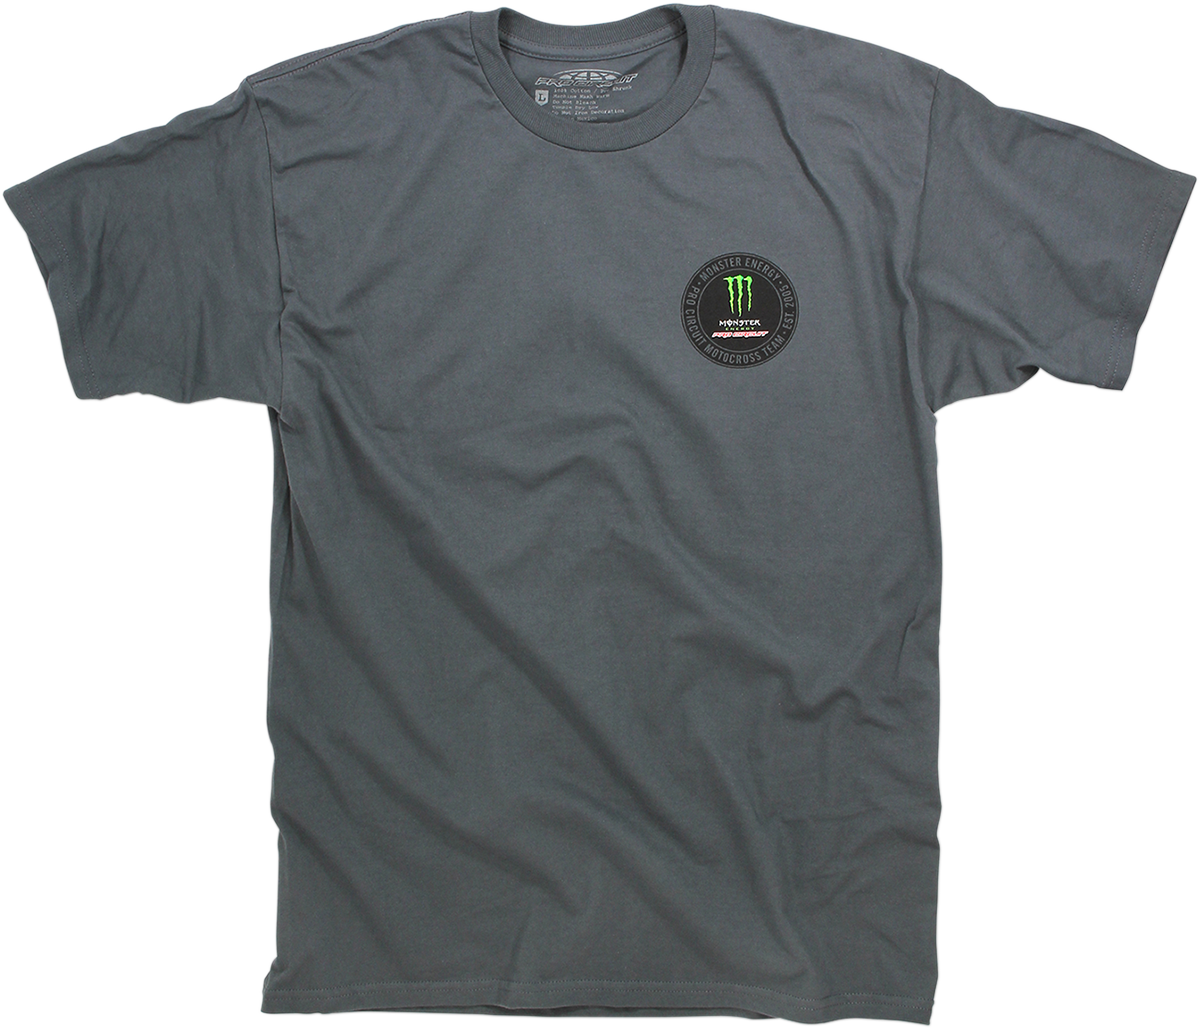 PRO CIRCUIT Patch T-Shirt - Gray - Medium 6411560-020